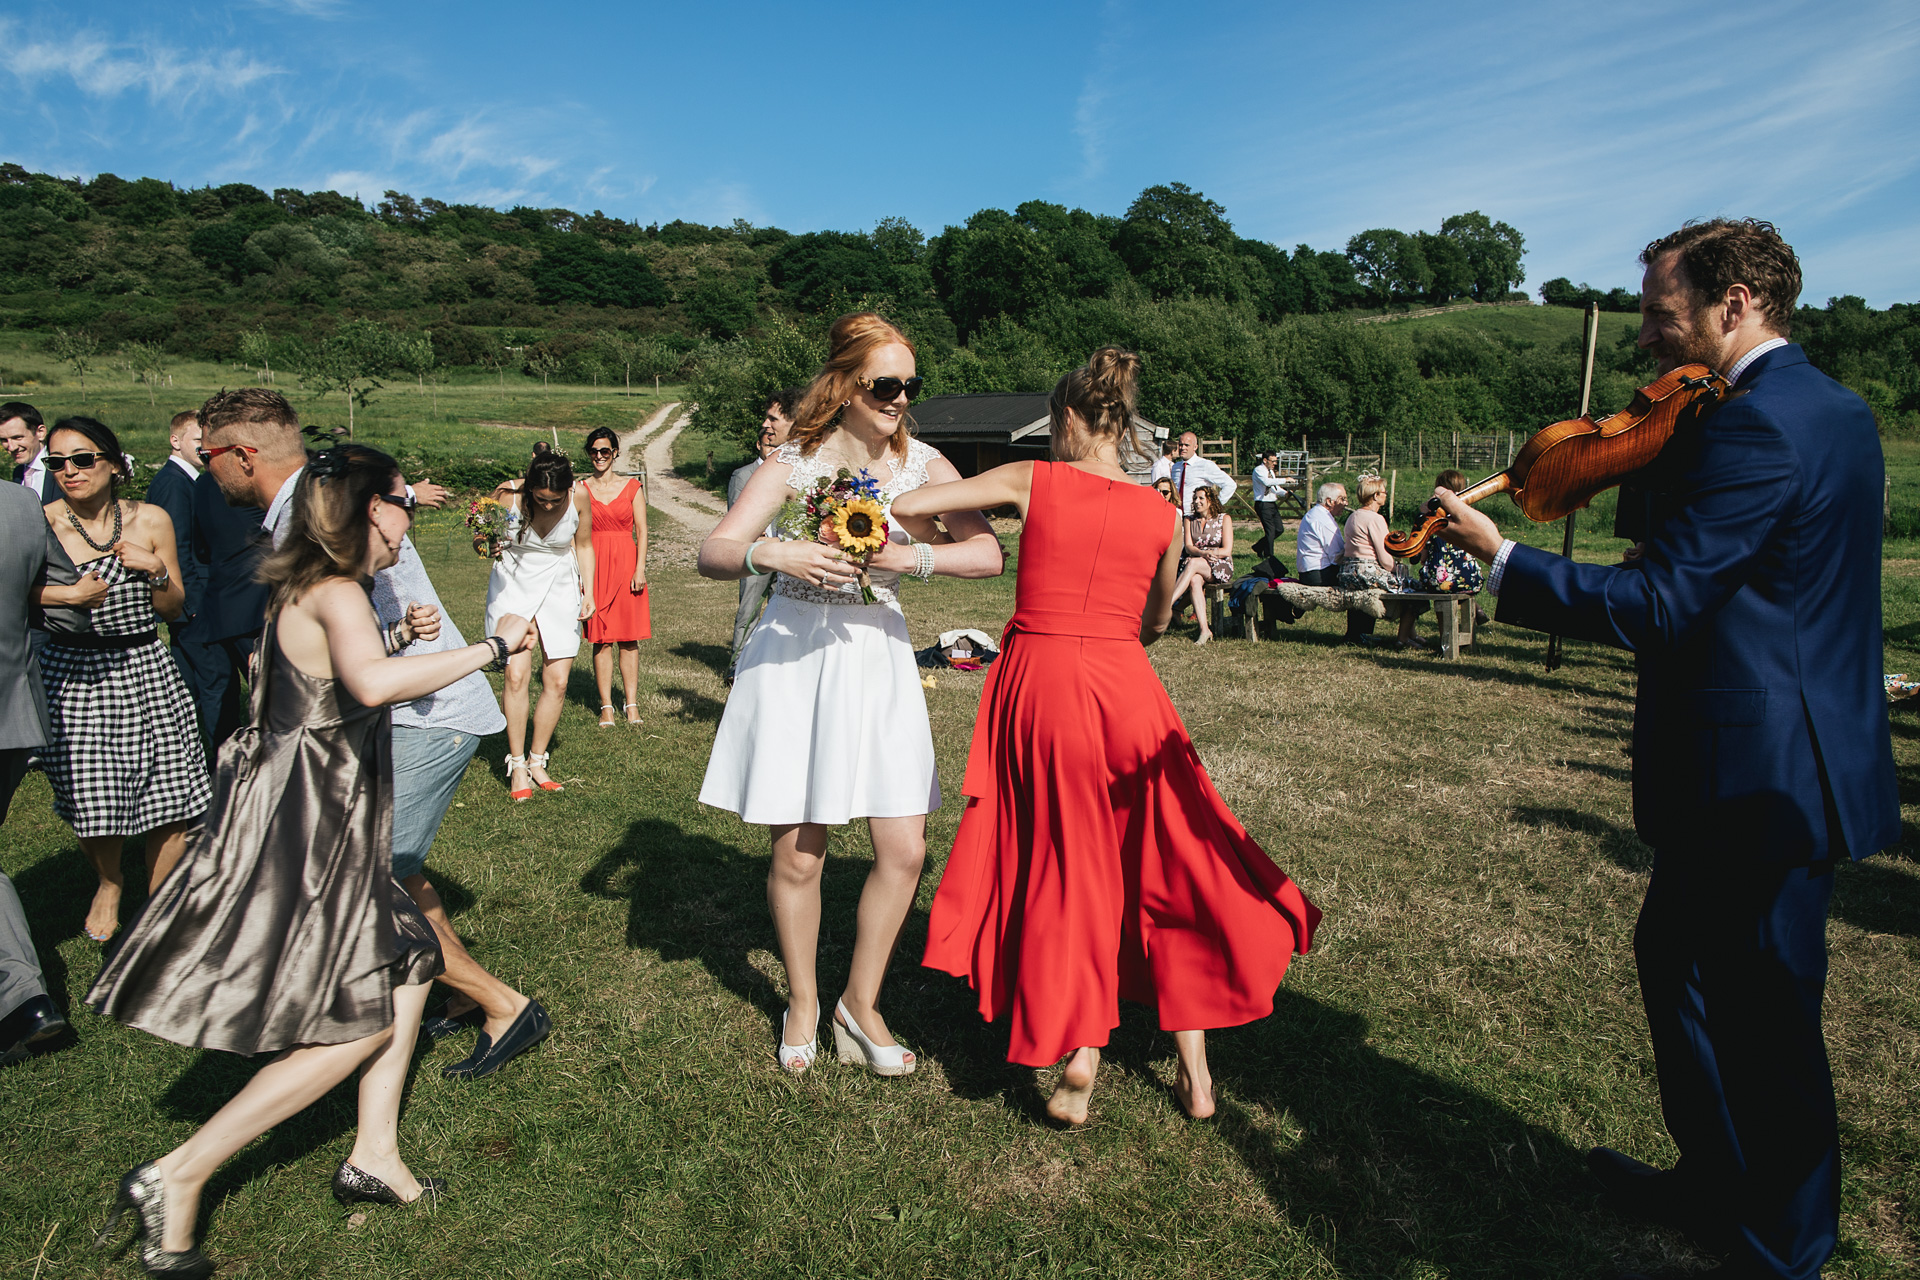 Wedding guests dancing in a field